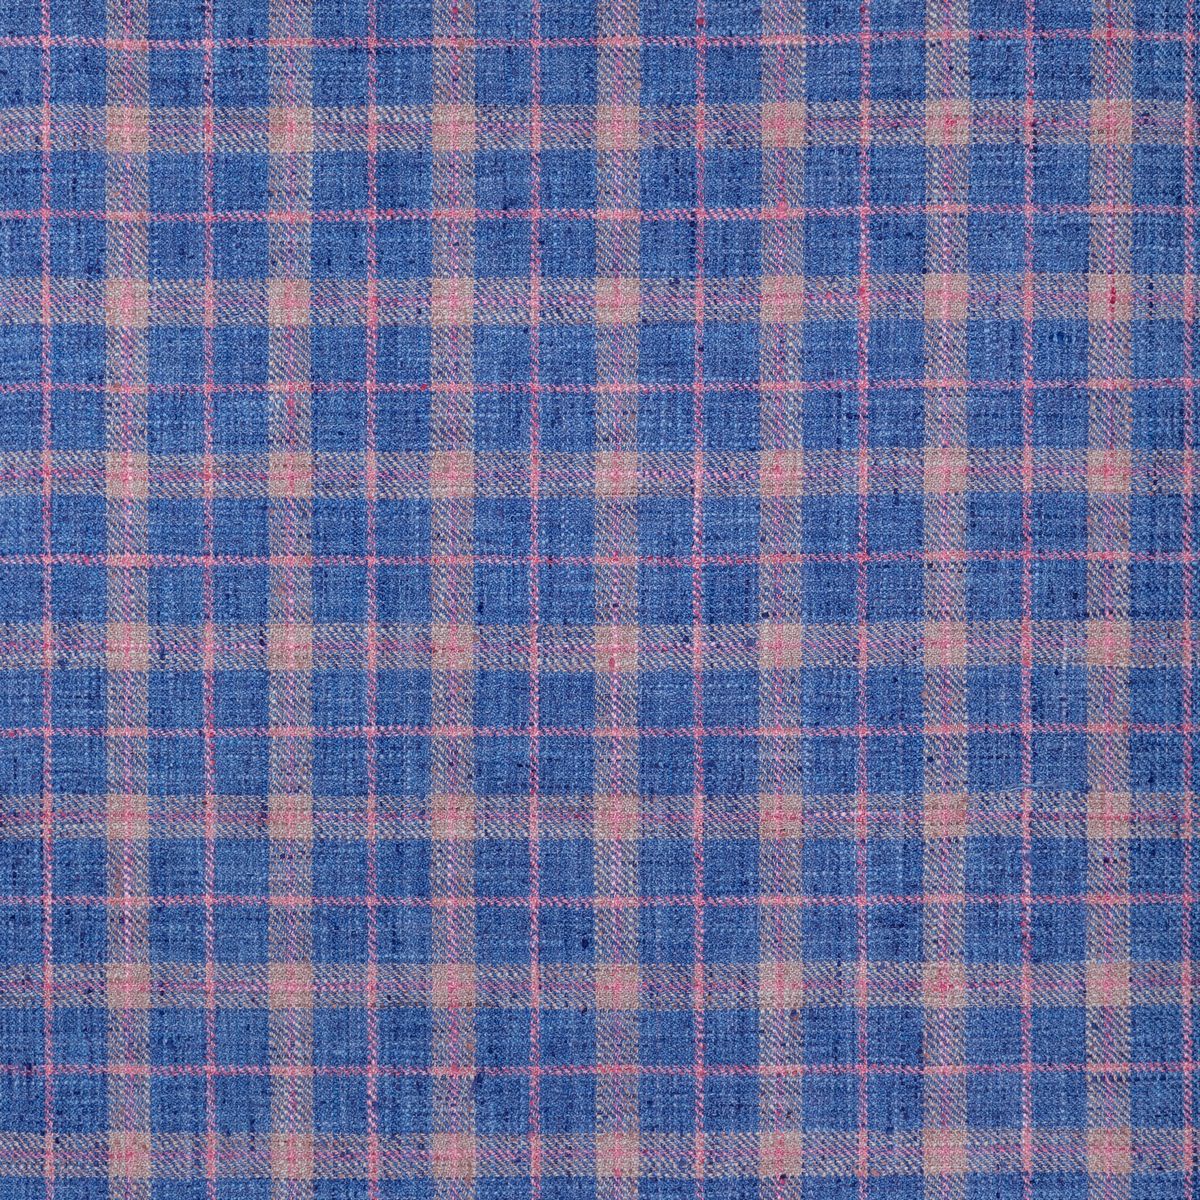 Painswick Indigo Fabric by Voyage Maison